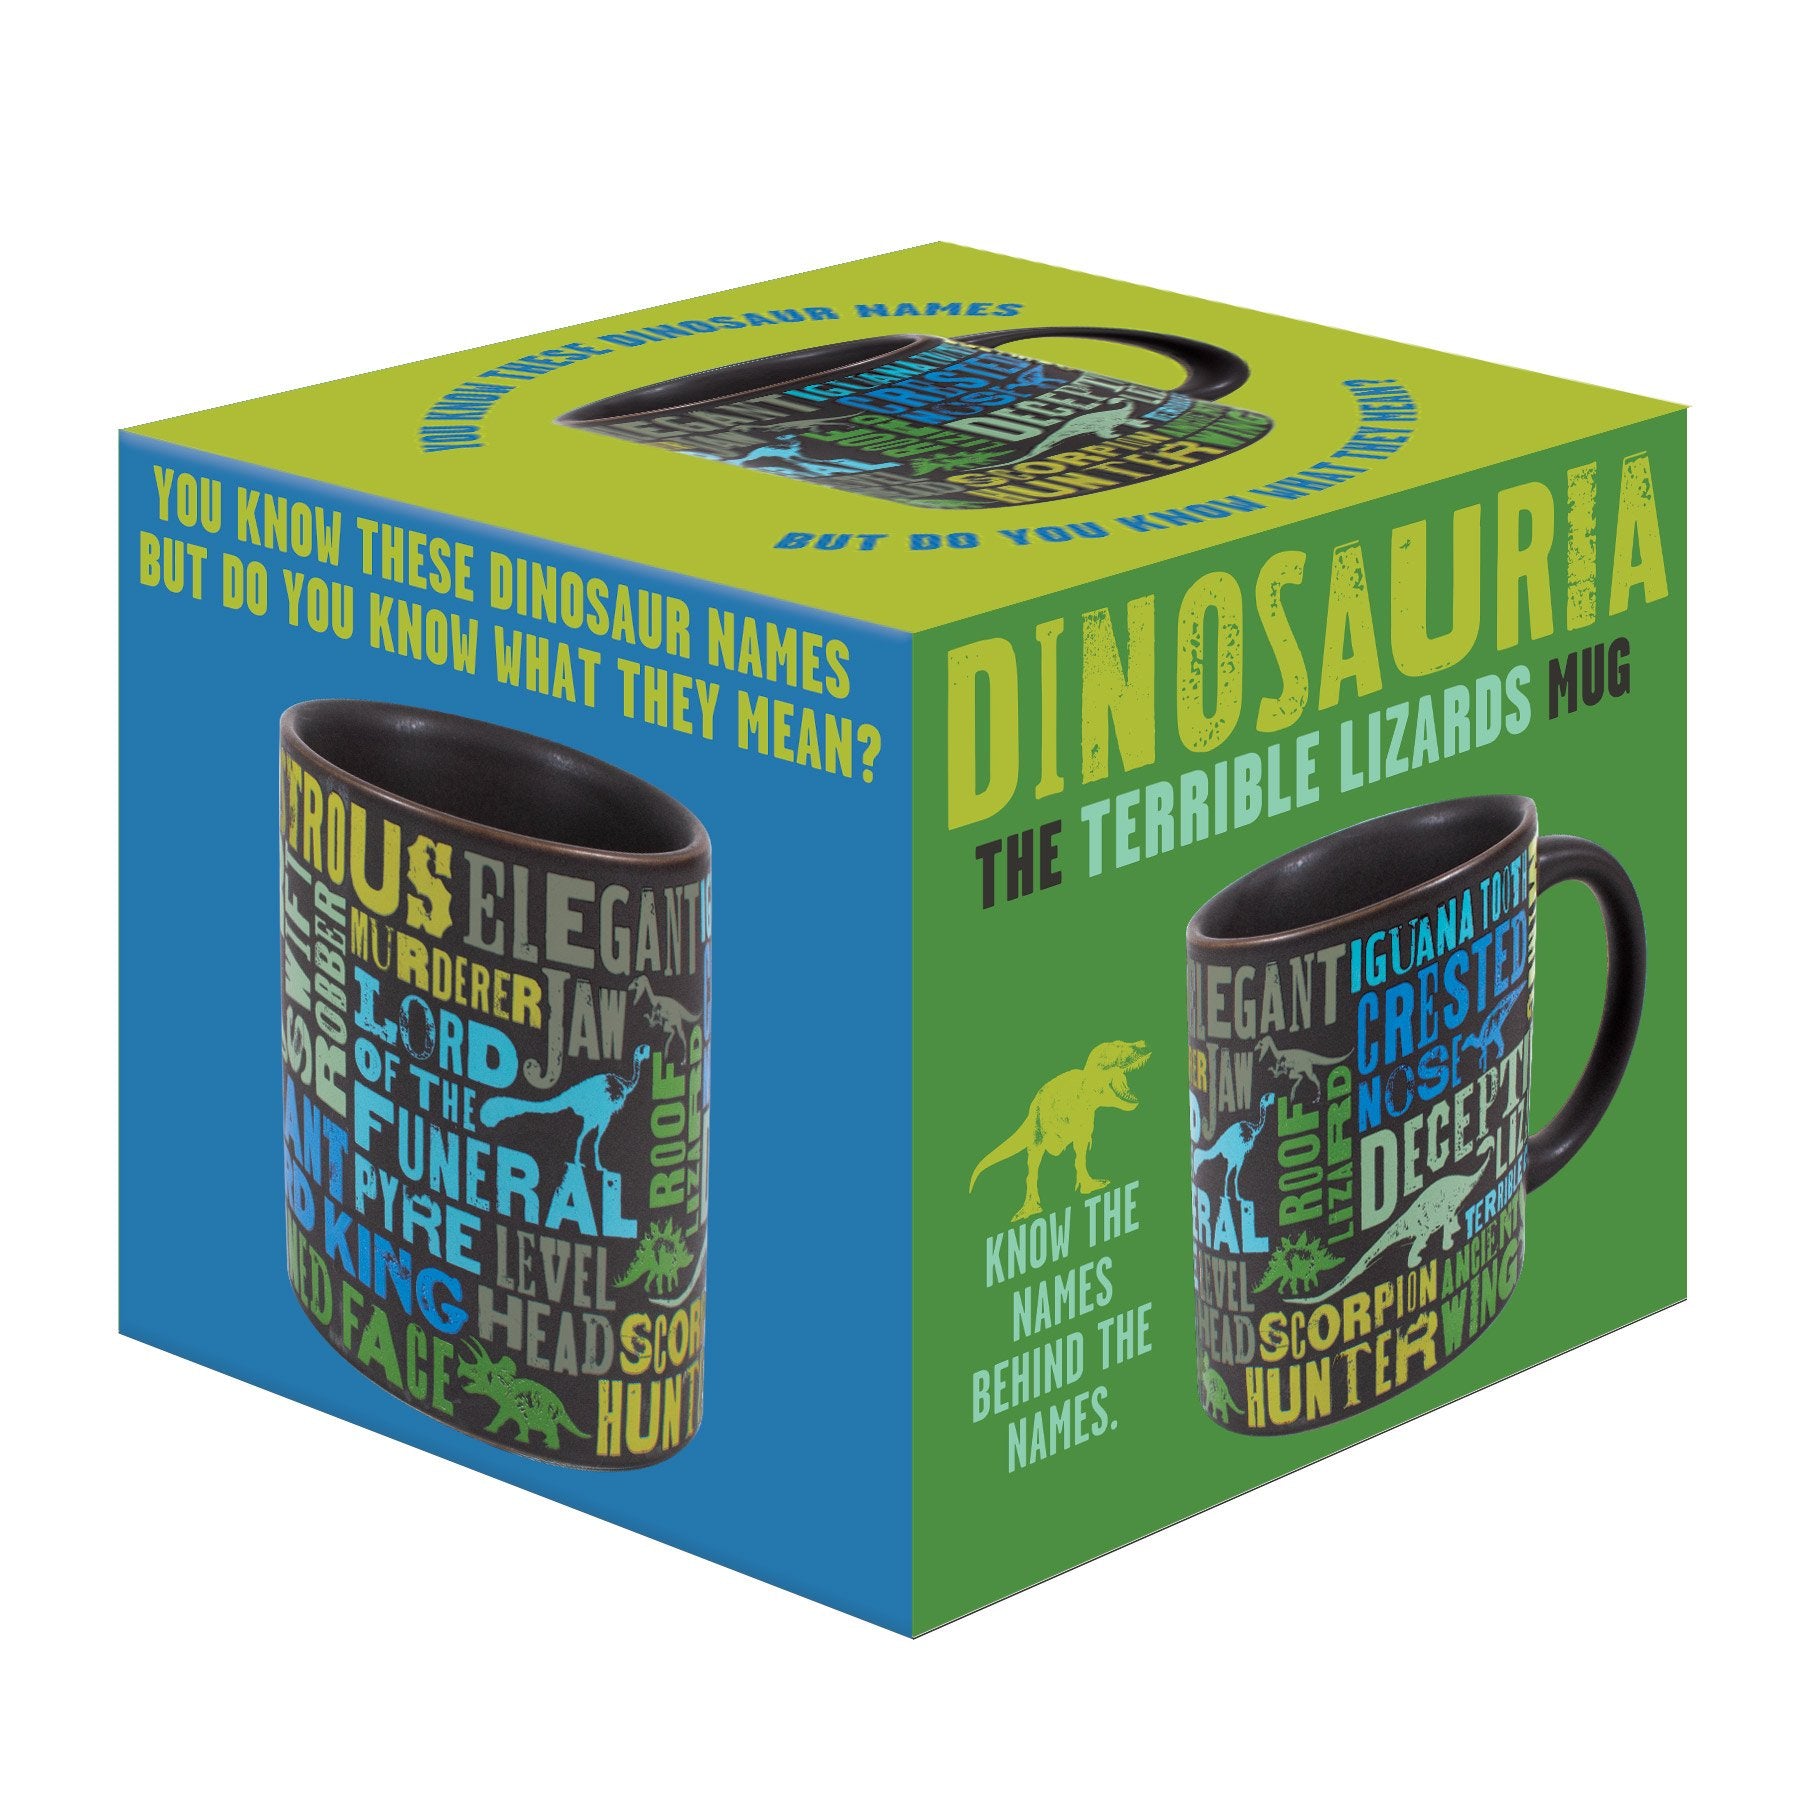 Dinosauria - The Terrible Lizards Mug    